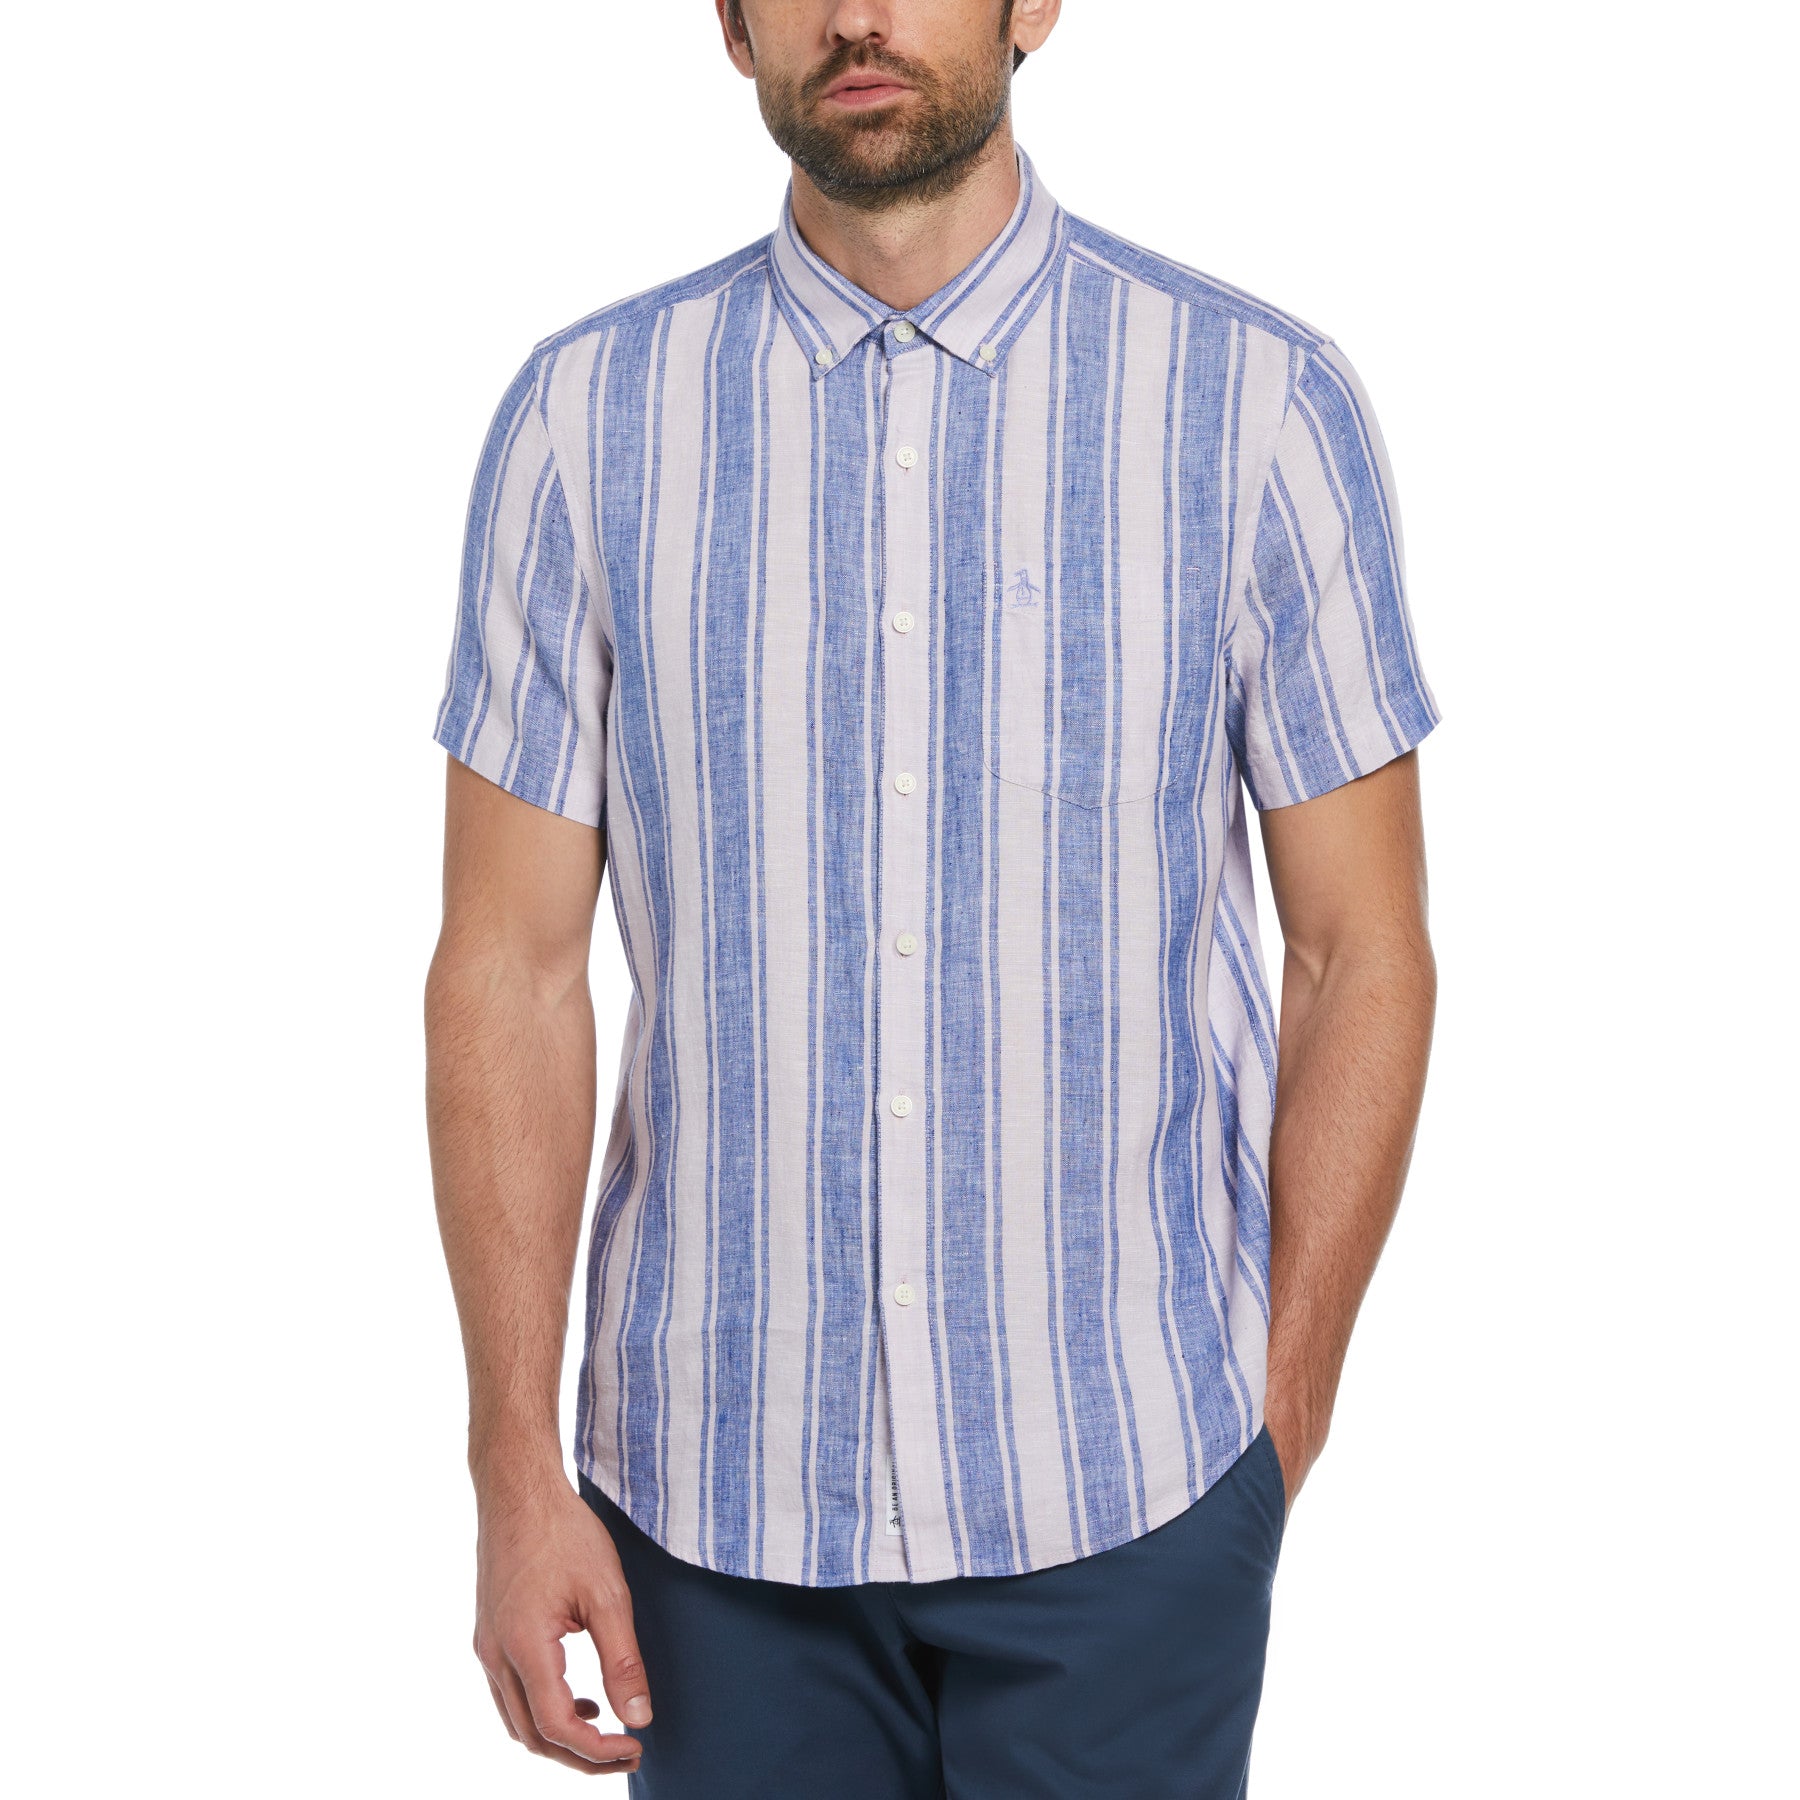 View Delave Linen Short Sleeve ButtonDown Shirt In Lavender Frost information